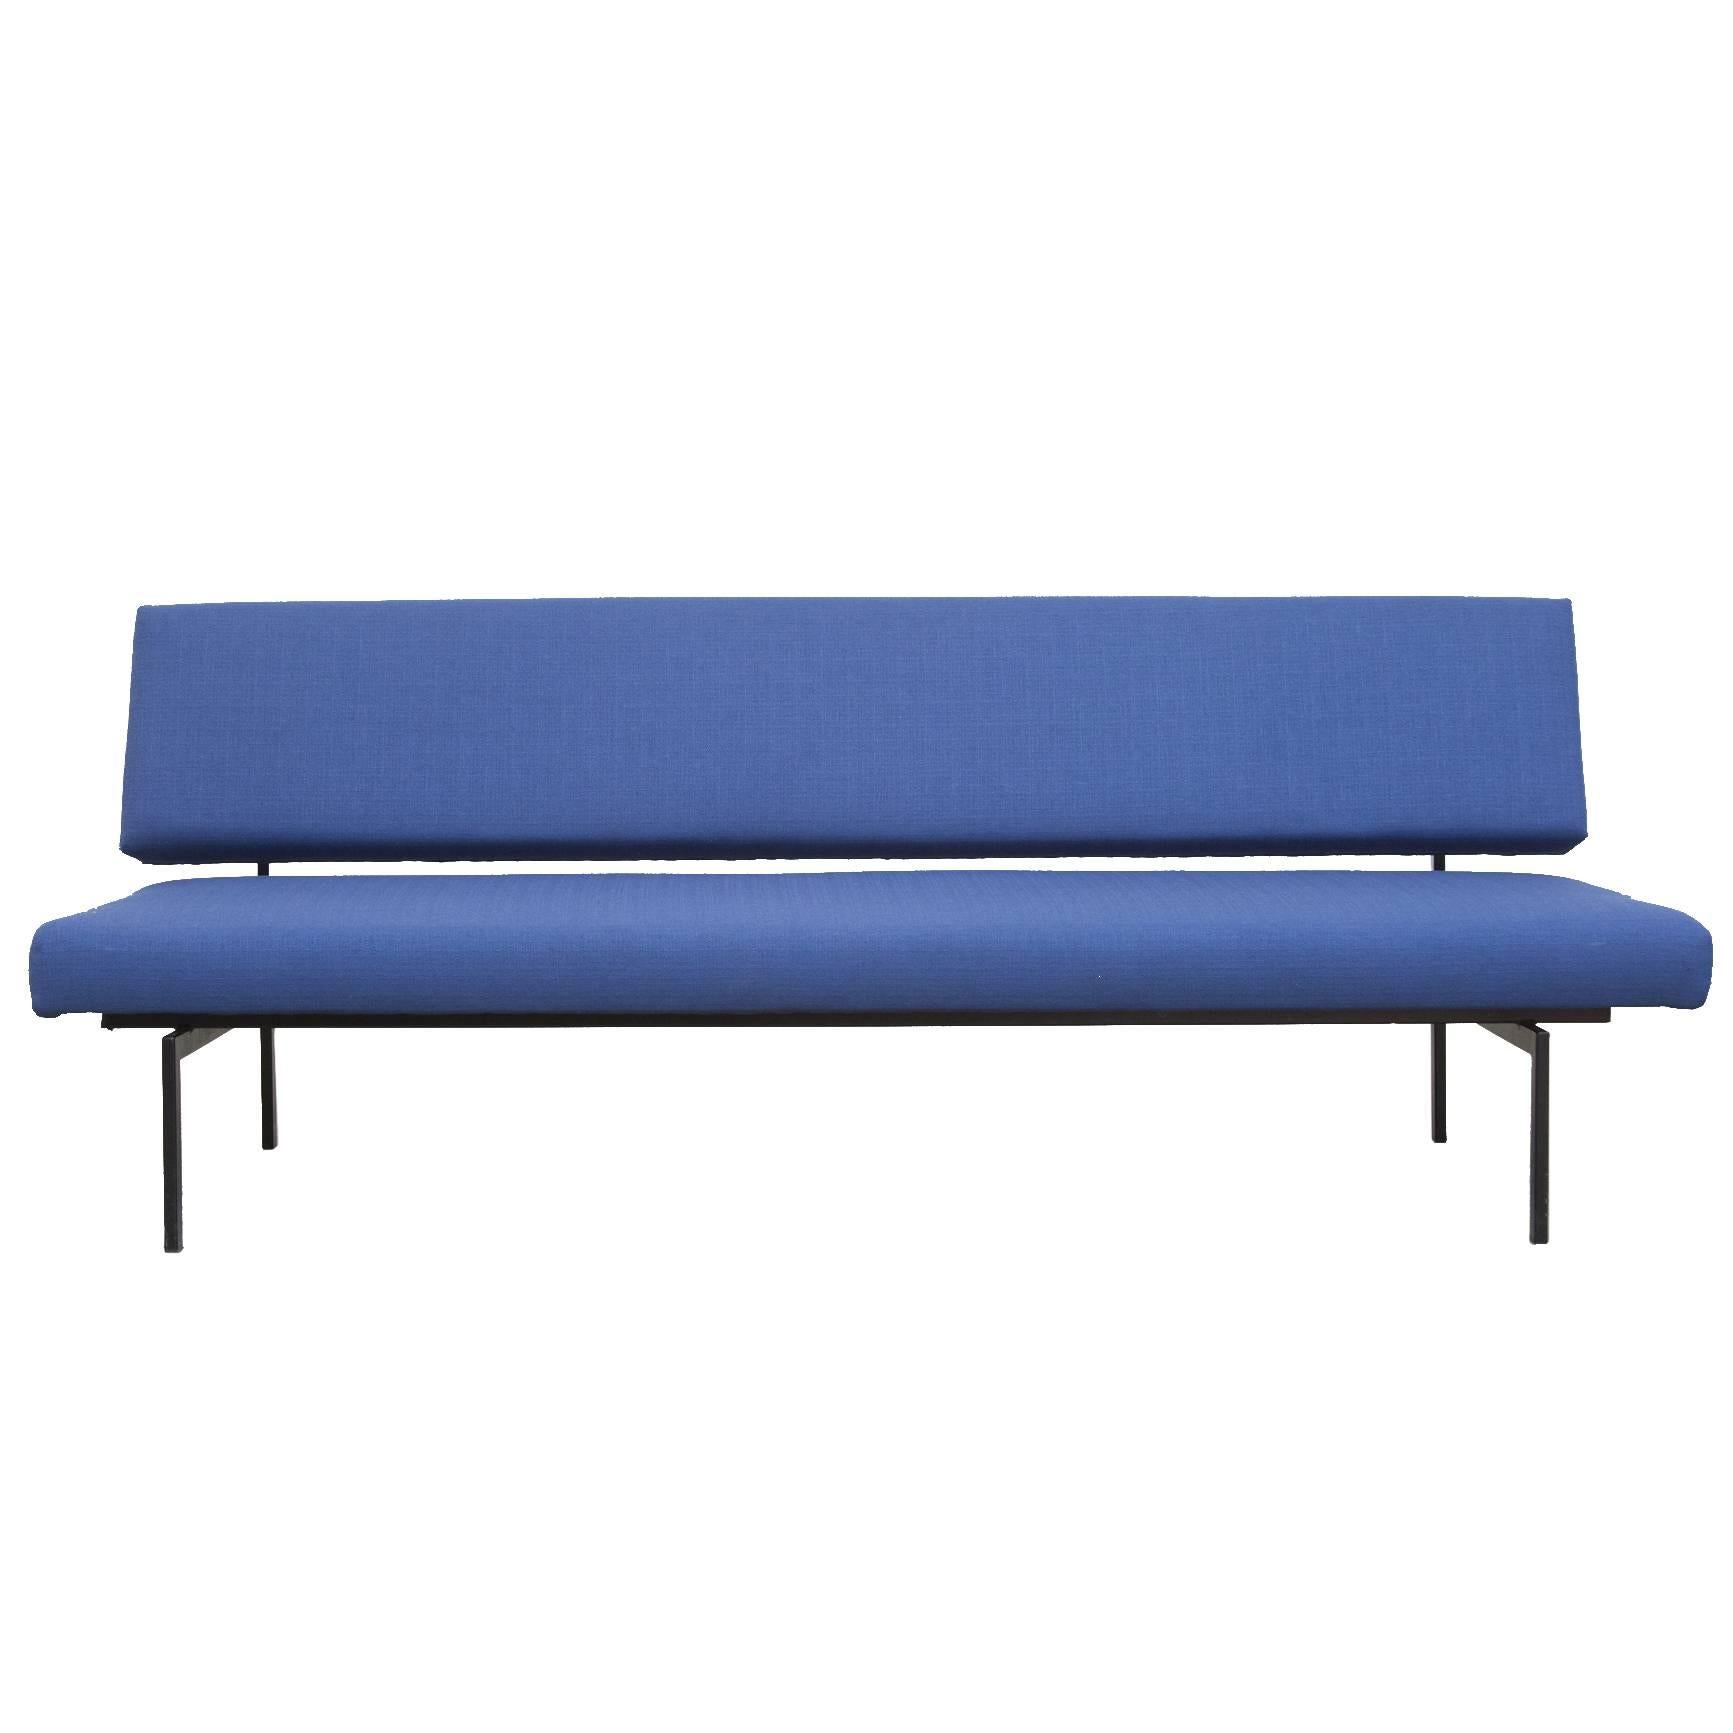 Royal Blue Gijs van der Sluis Streamline Sofa